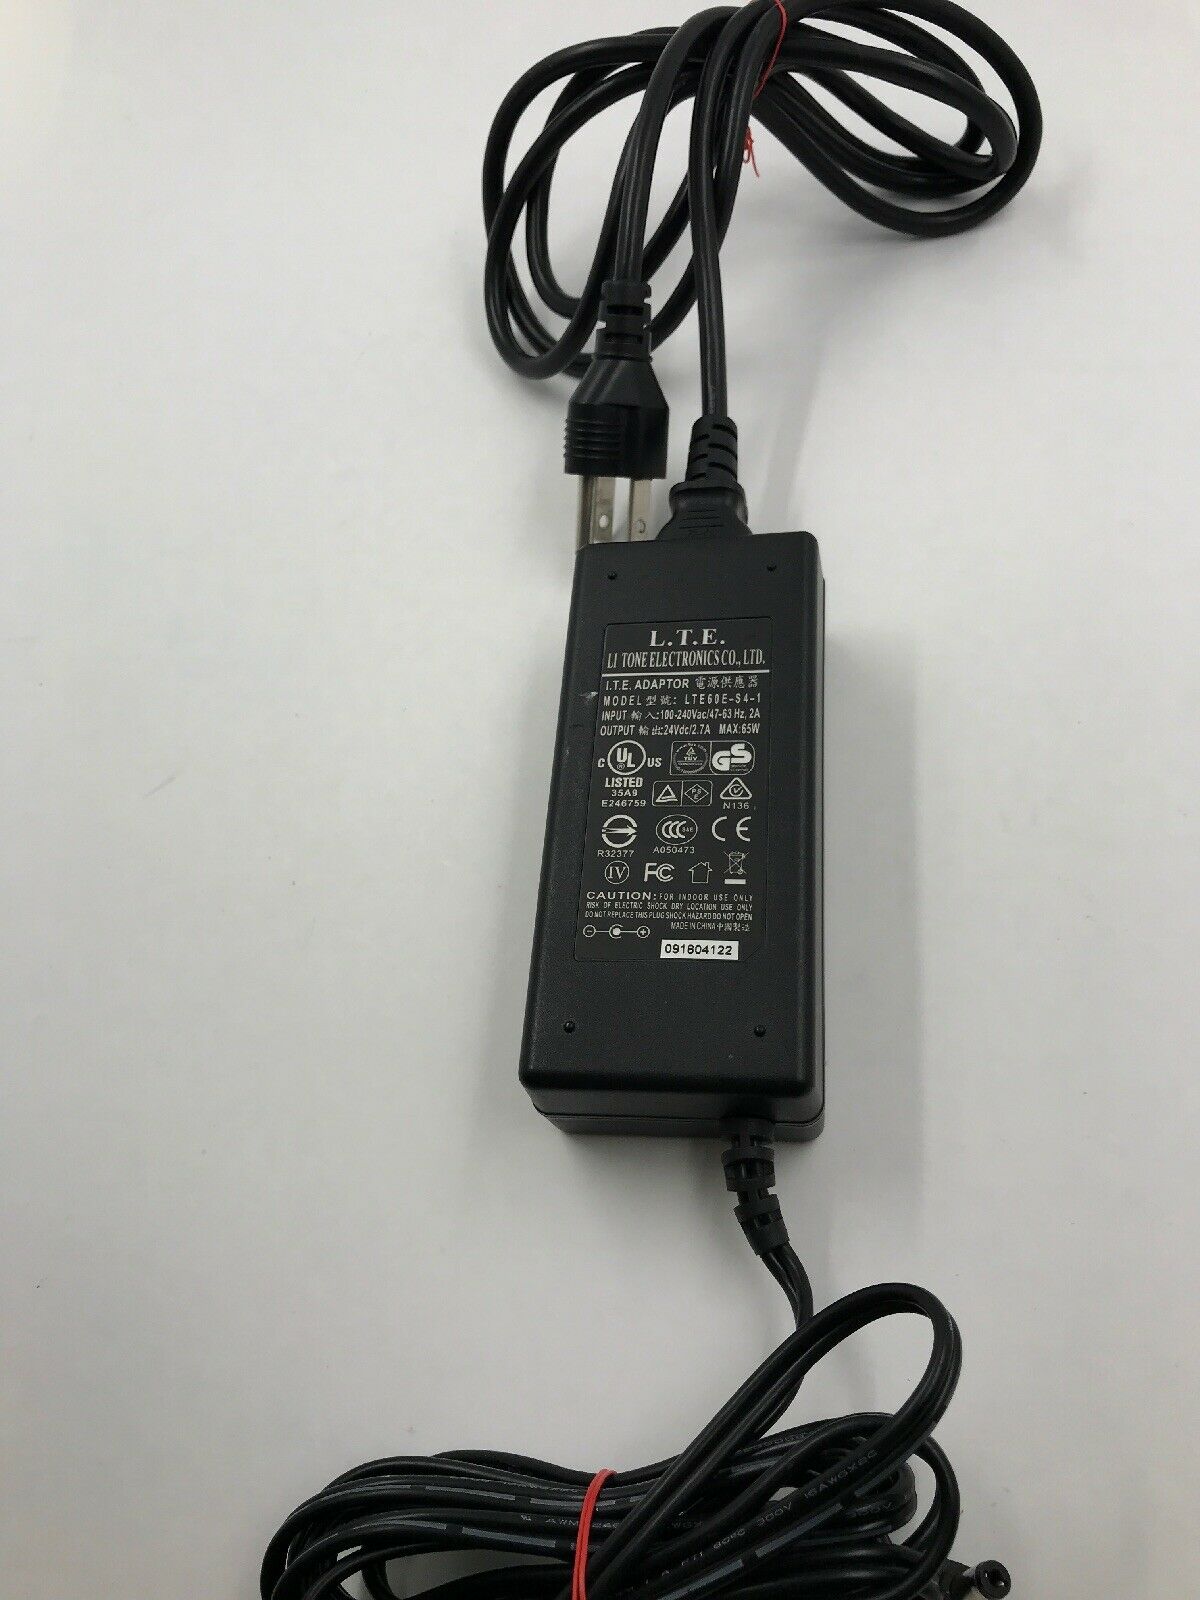 NEW LI Tone Electronics LTE60E-S4-1 power supply charger I.T.E. 24V 2.7A Adaptor